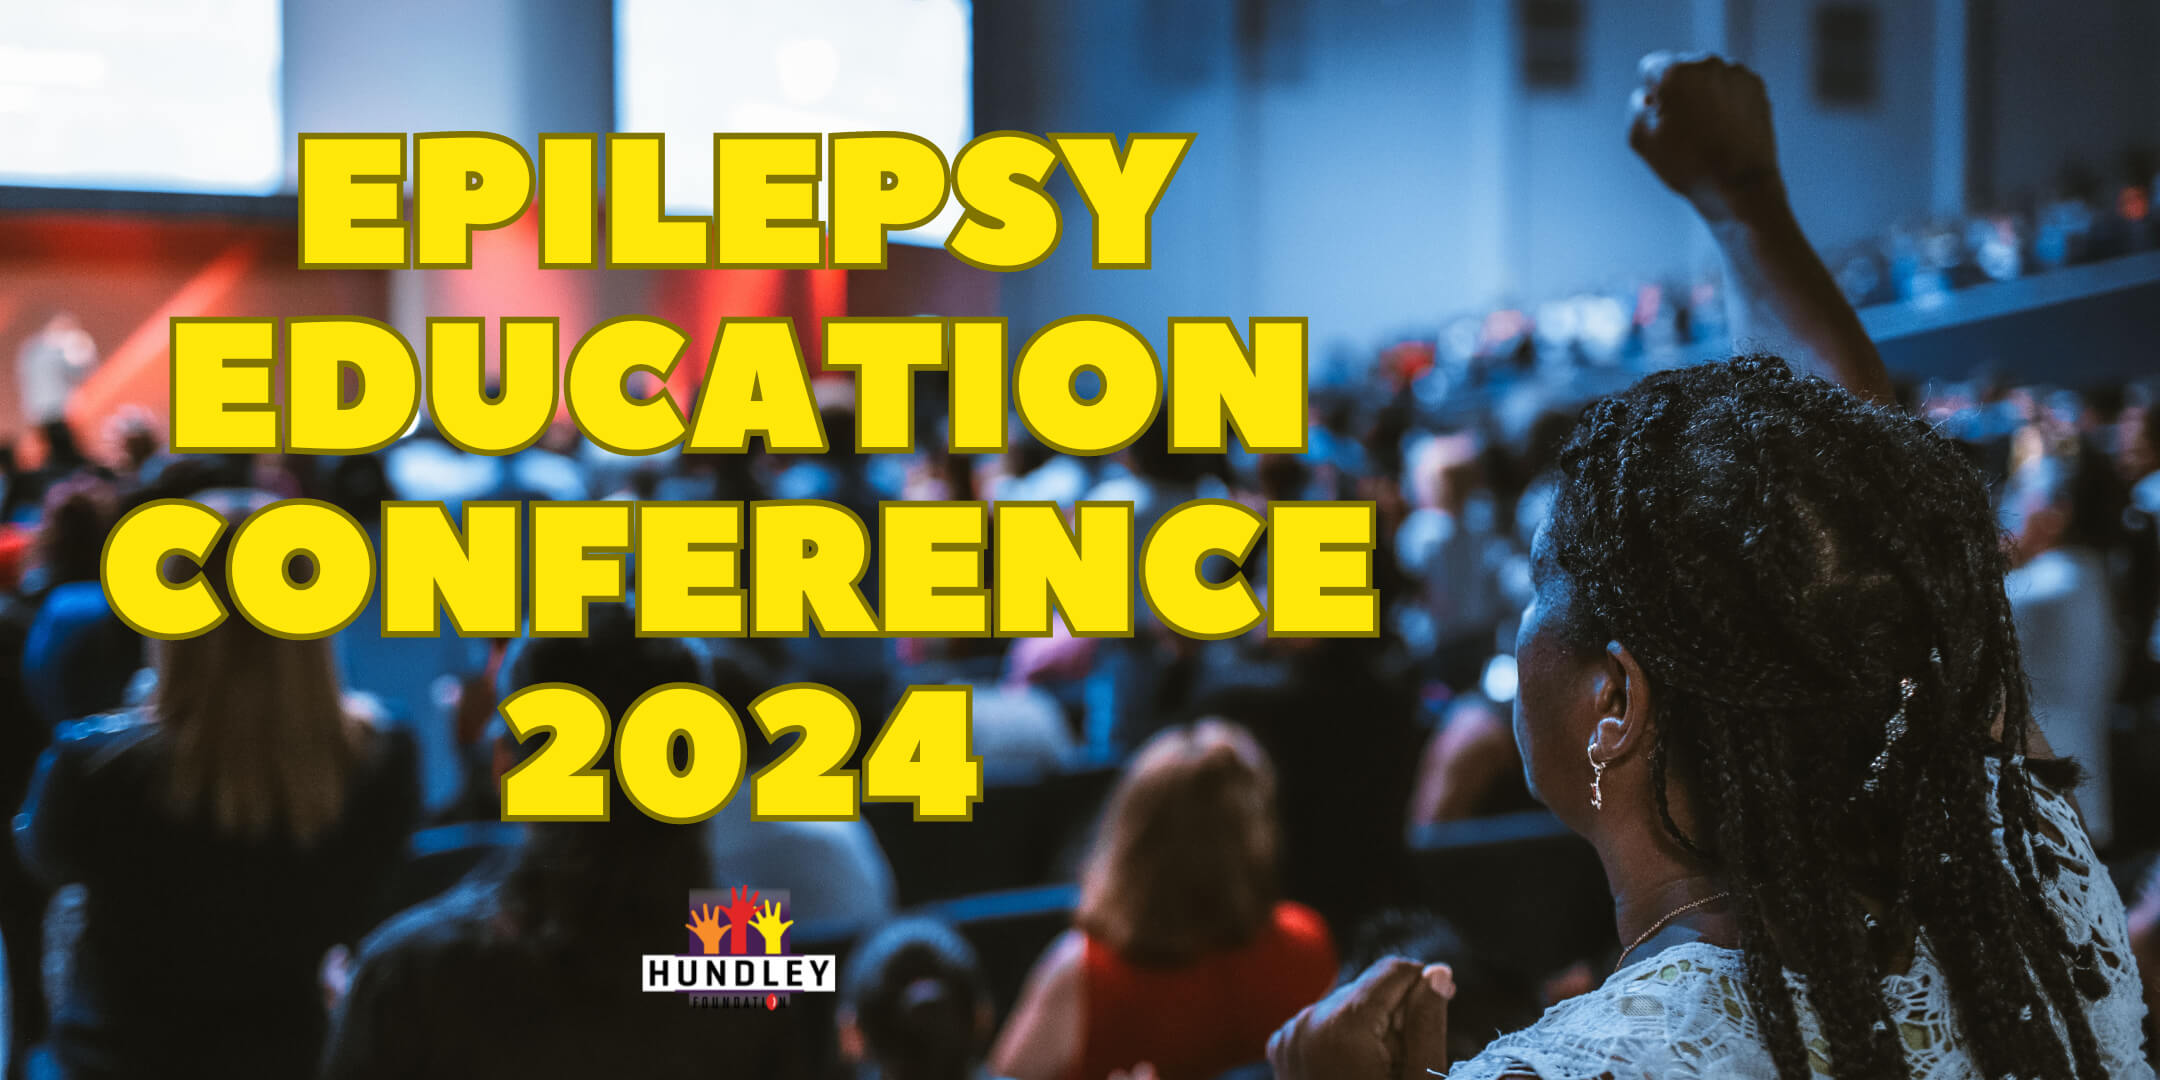 Epilepsy Education Conference 2024